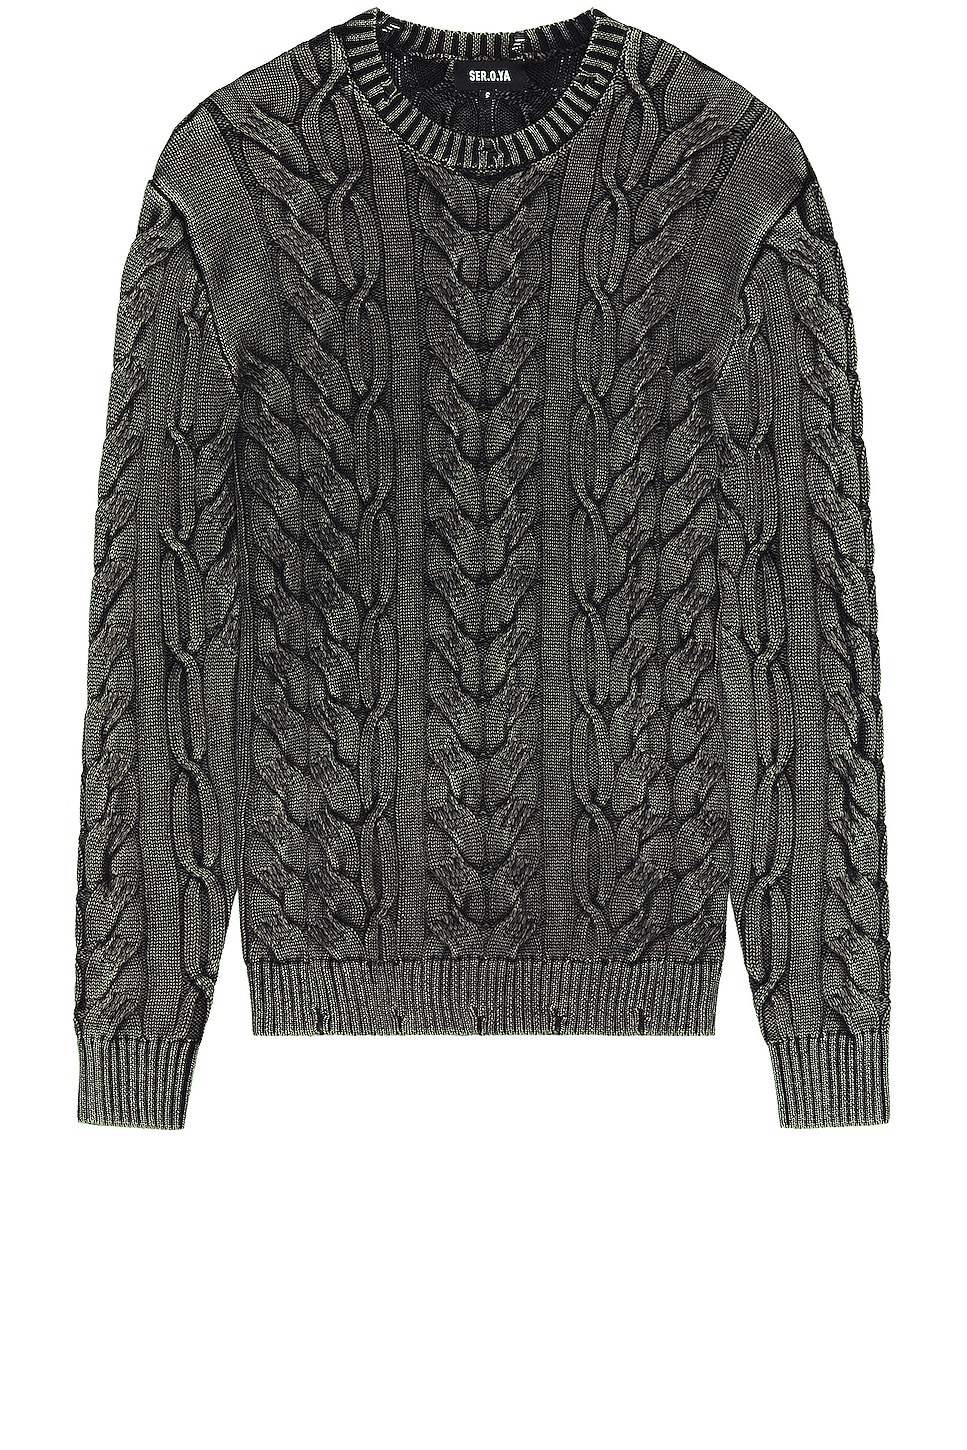 Image 1 of SER.O.YA Lewis Sweater in Black Washed